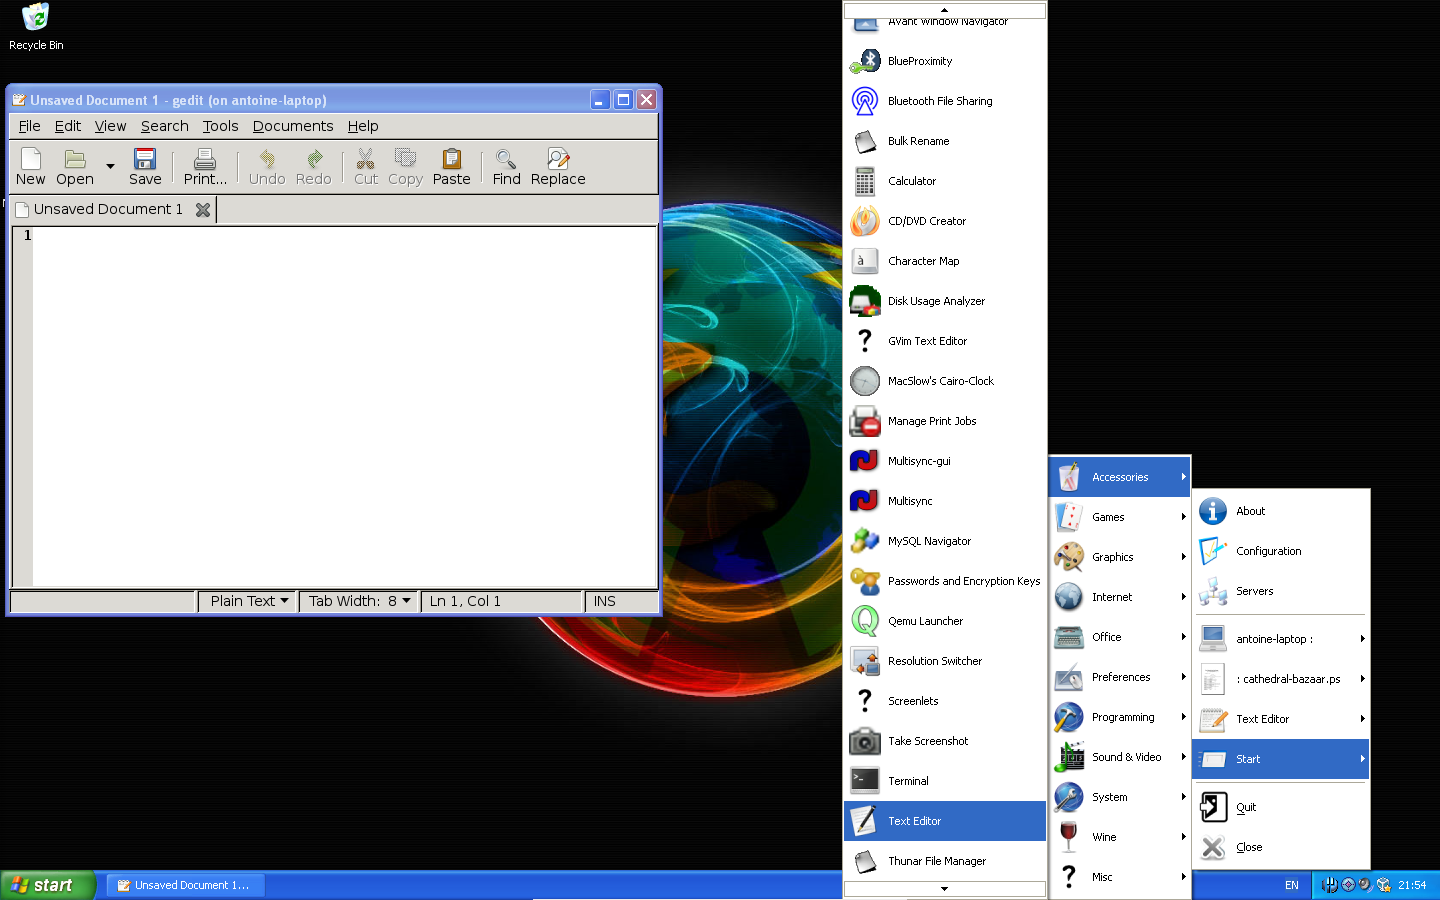 Windows XP Screenshots